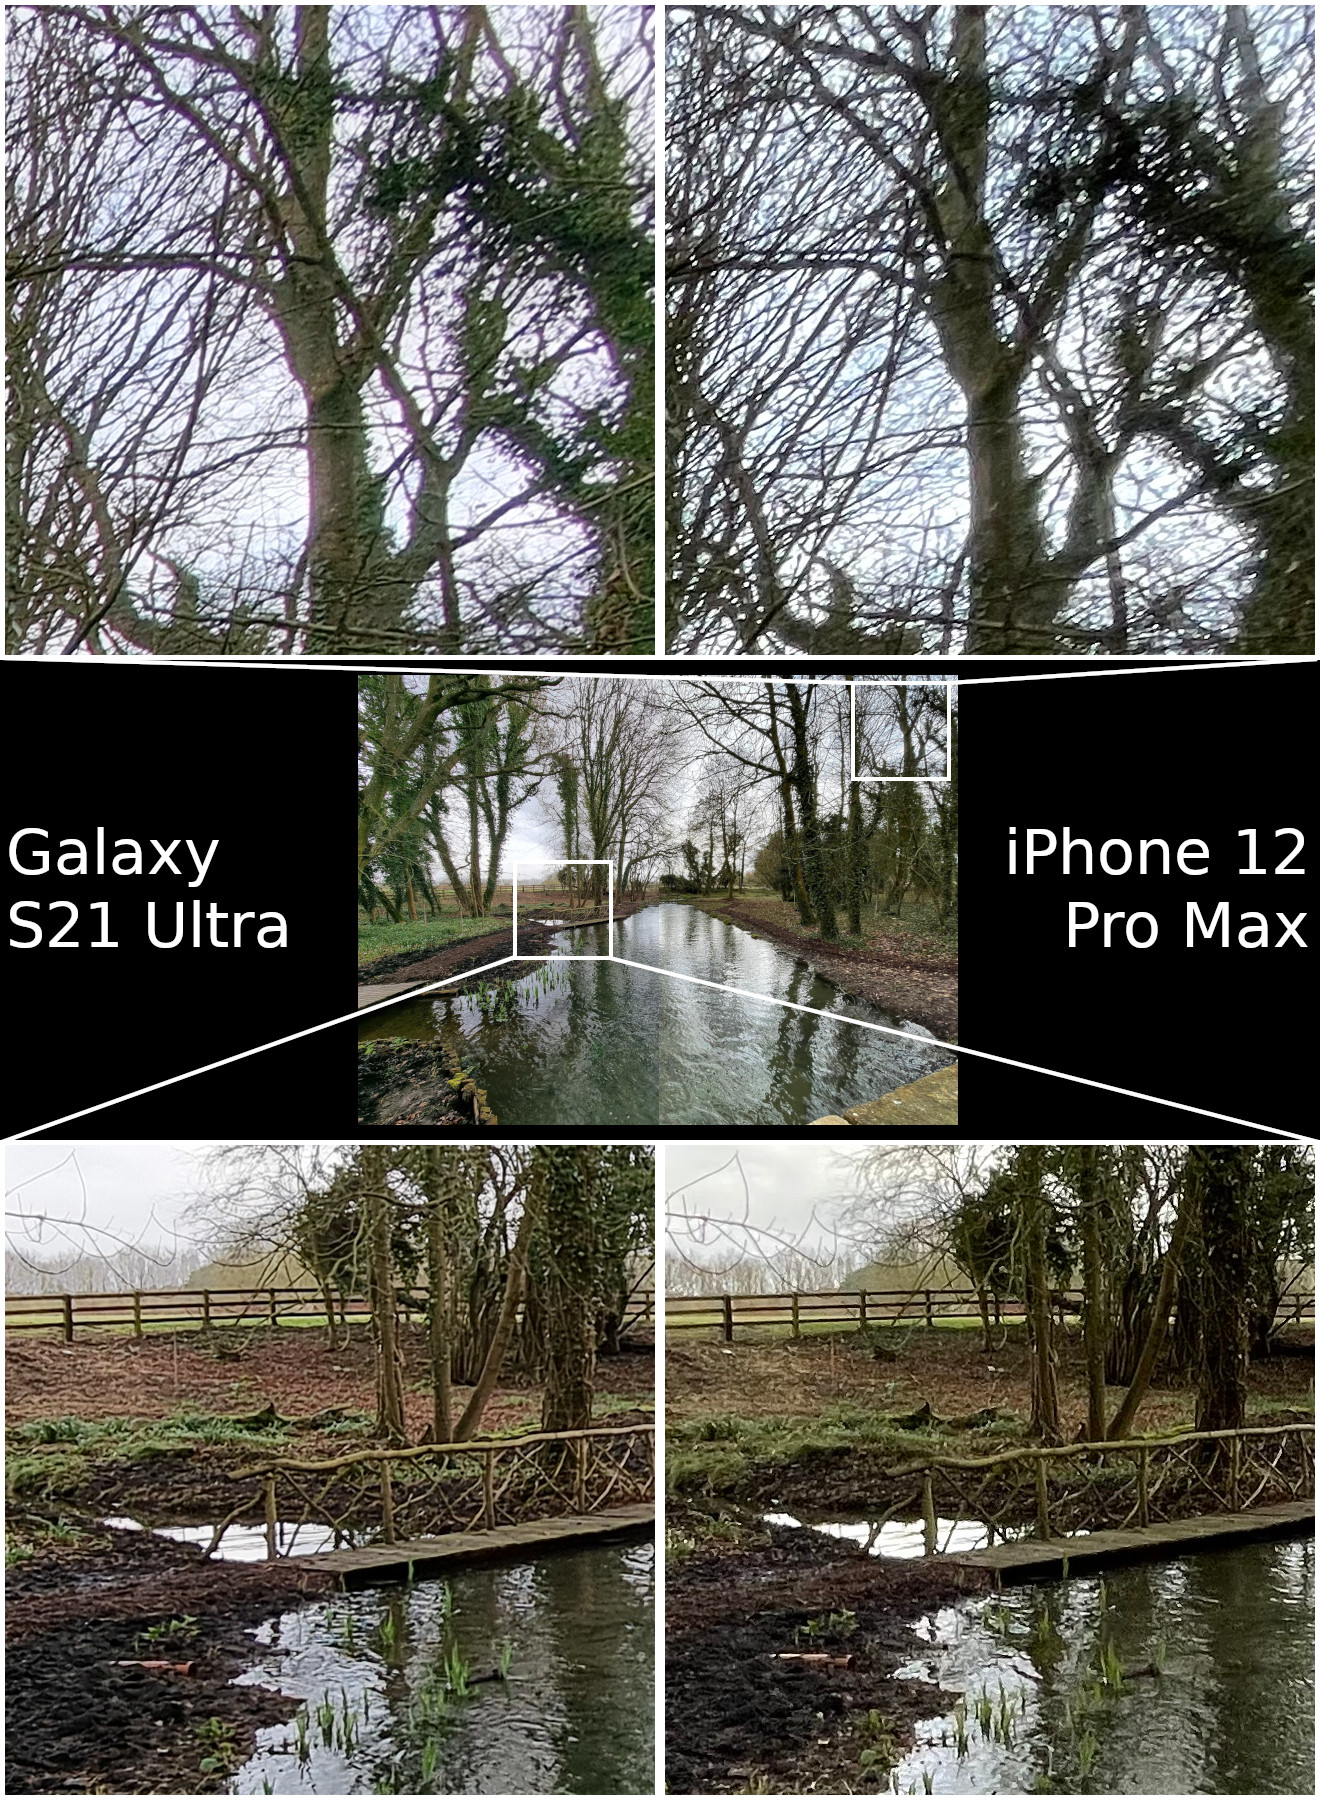 Wide Angle - Samsung Galaxy S21 Ultra vs iPhone 12 Pro Max